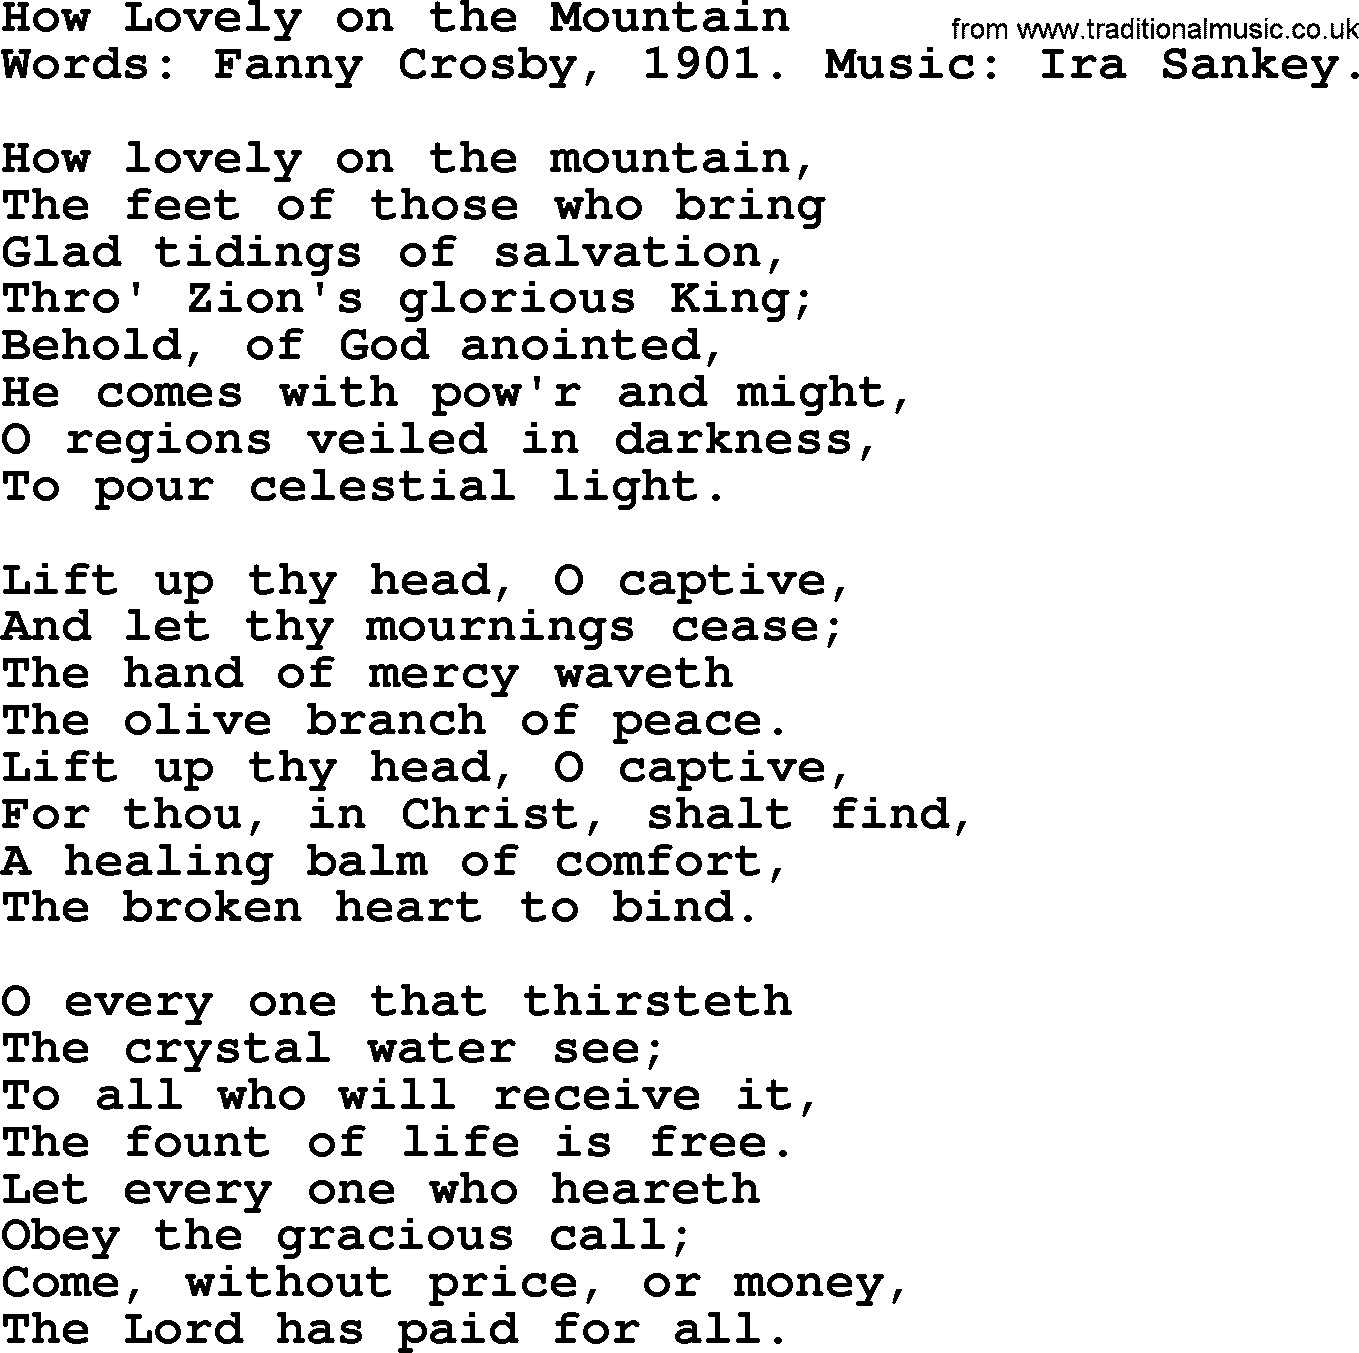 Fanny Crosby song: How Lovely On The Mountain, lyrics